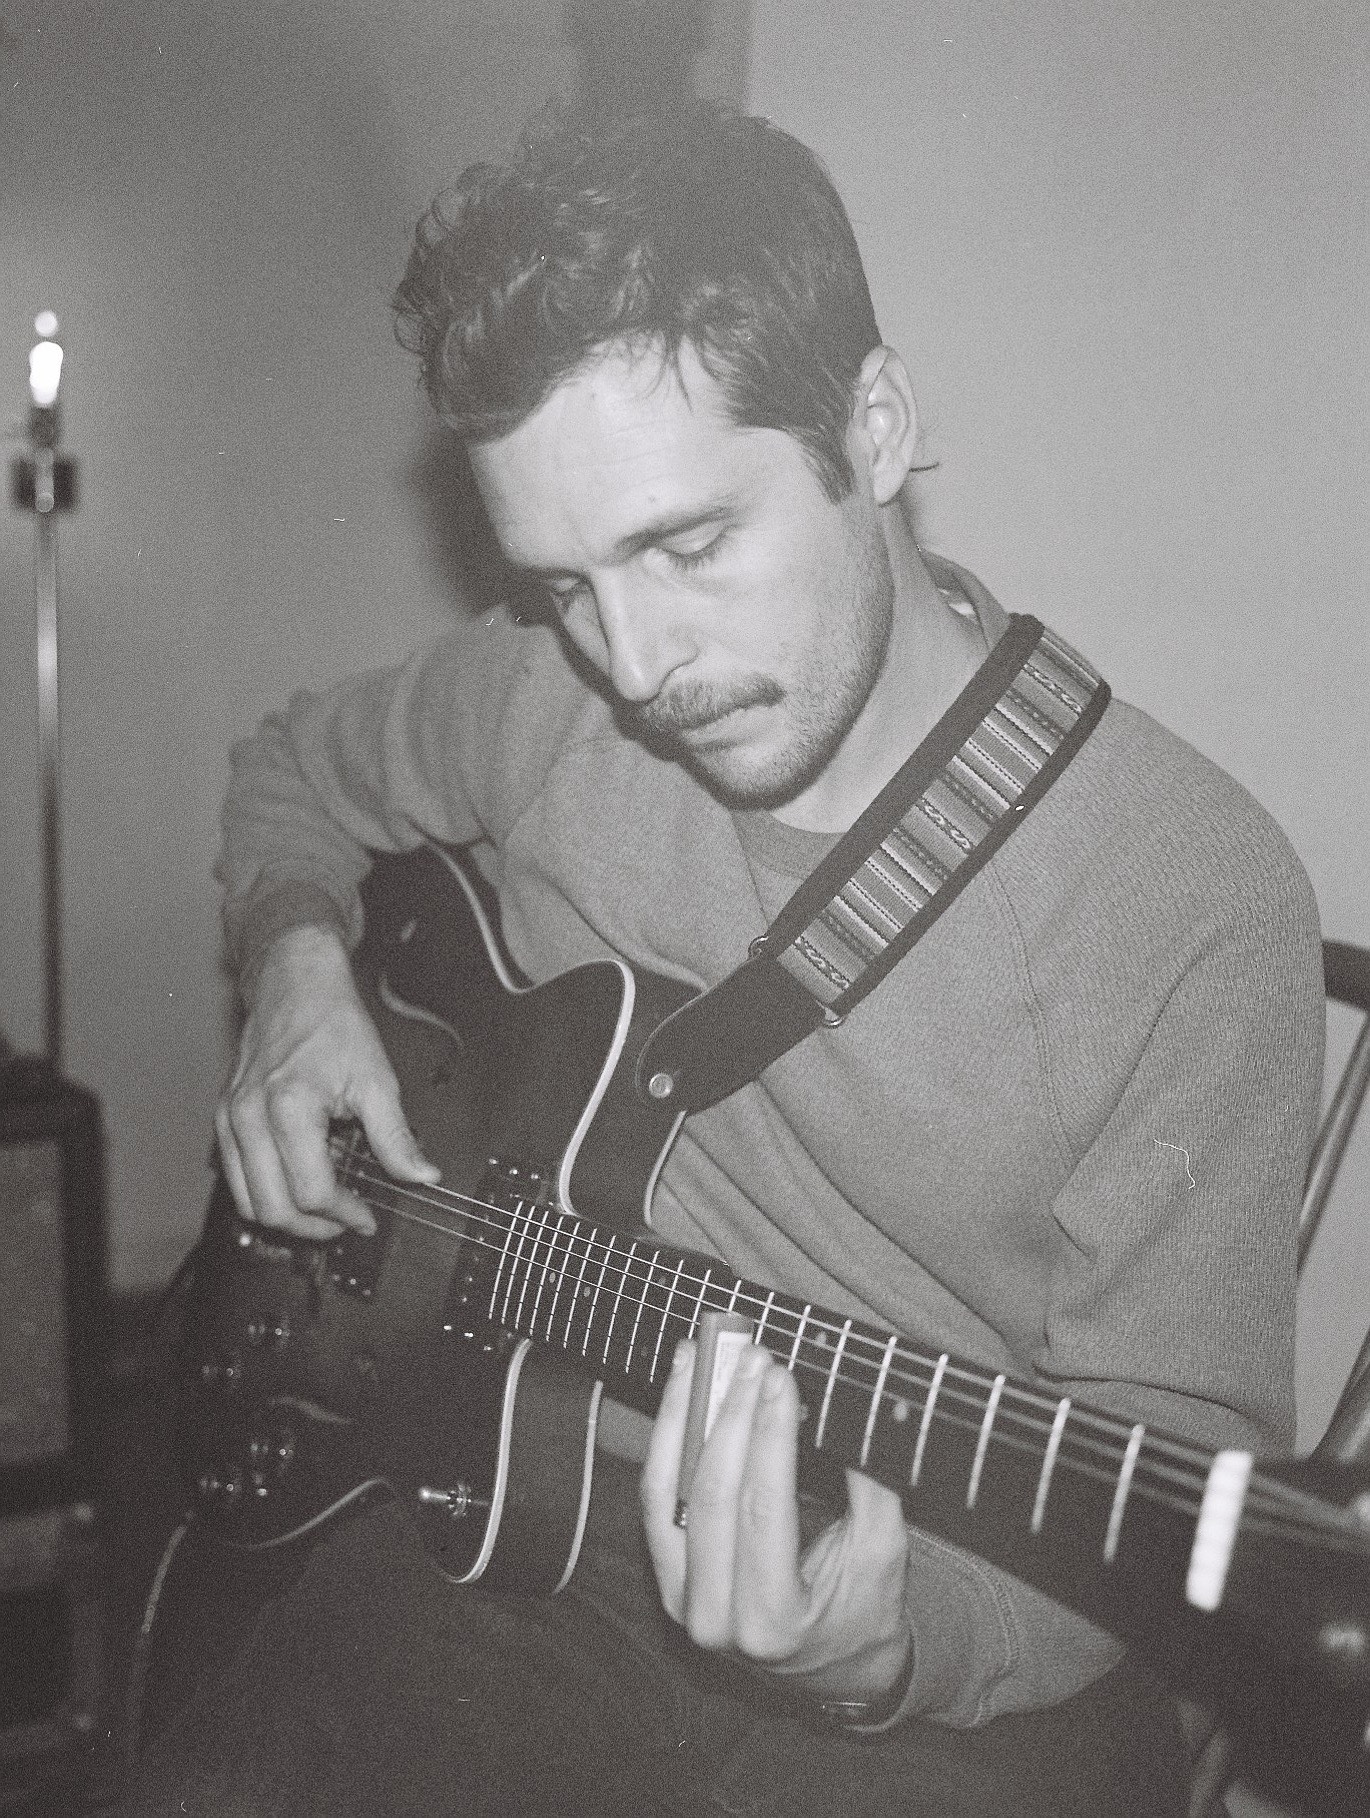 Joseph Teller playing guitar